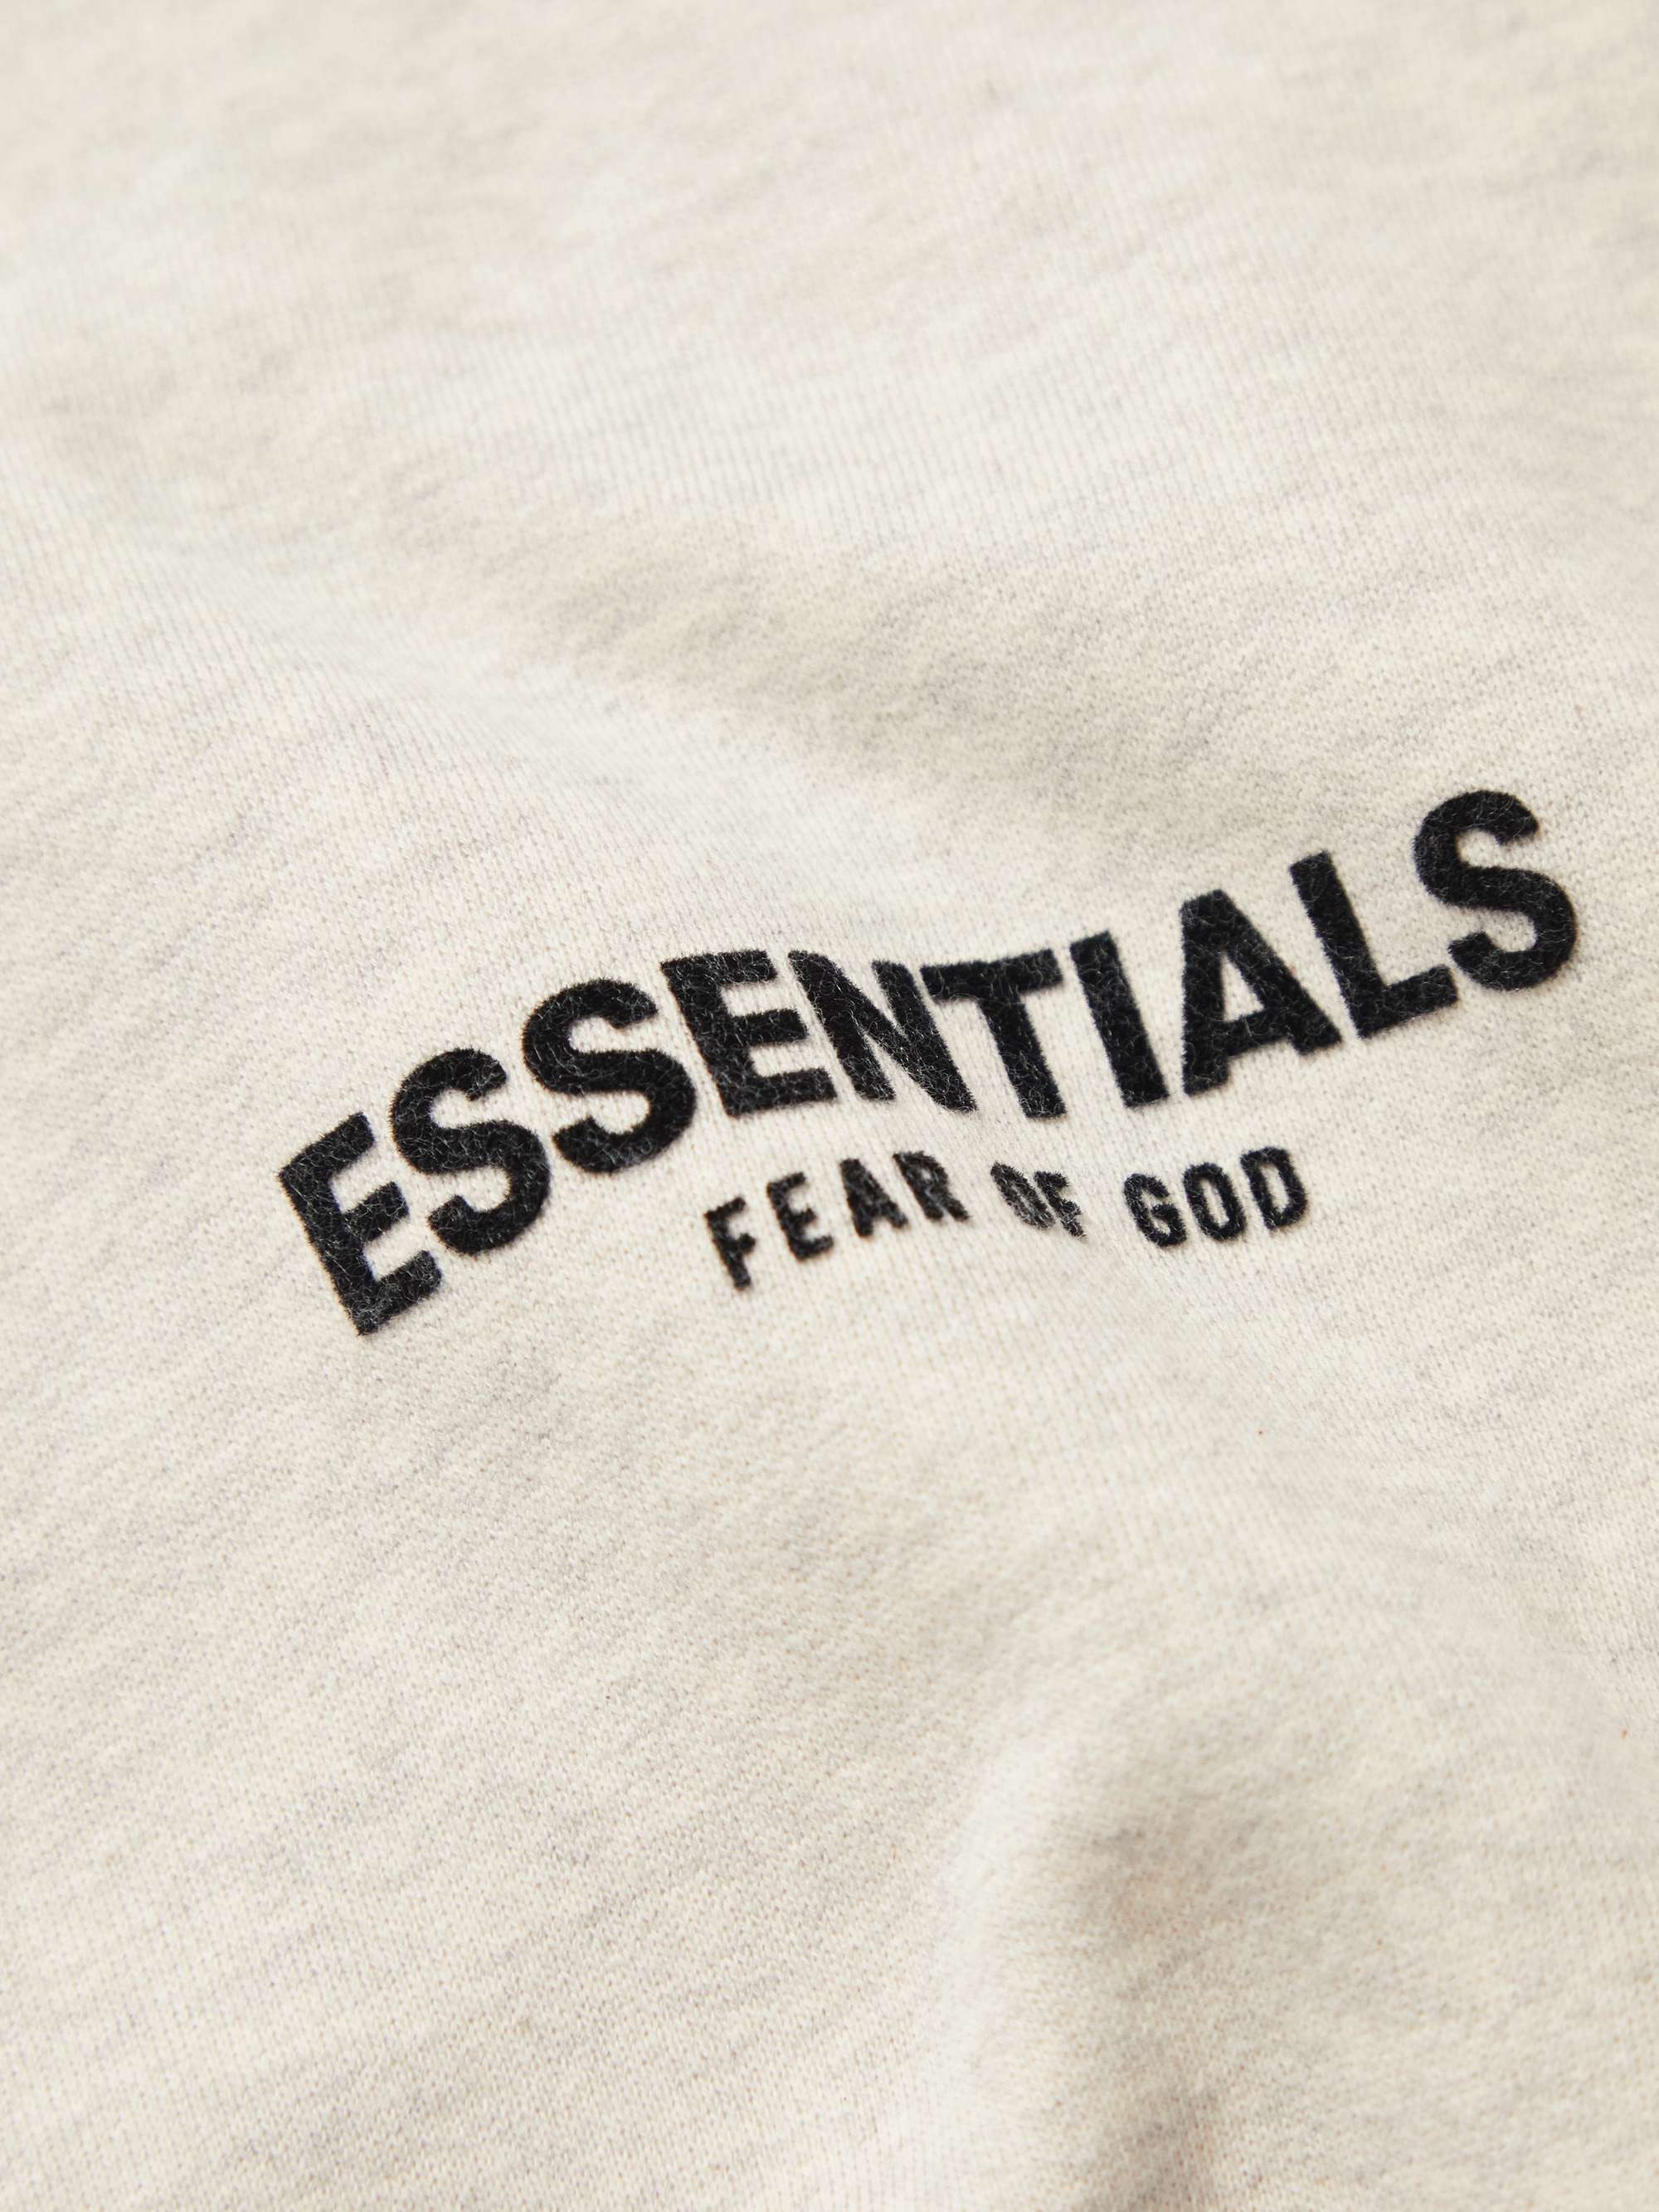 FEAR OF GOD ESSENTIALS Logo-Flocked Cotton-Blend Jersey Hoodie